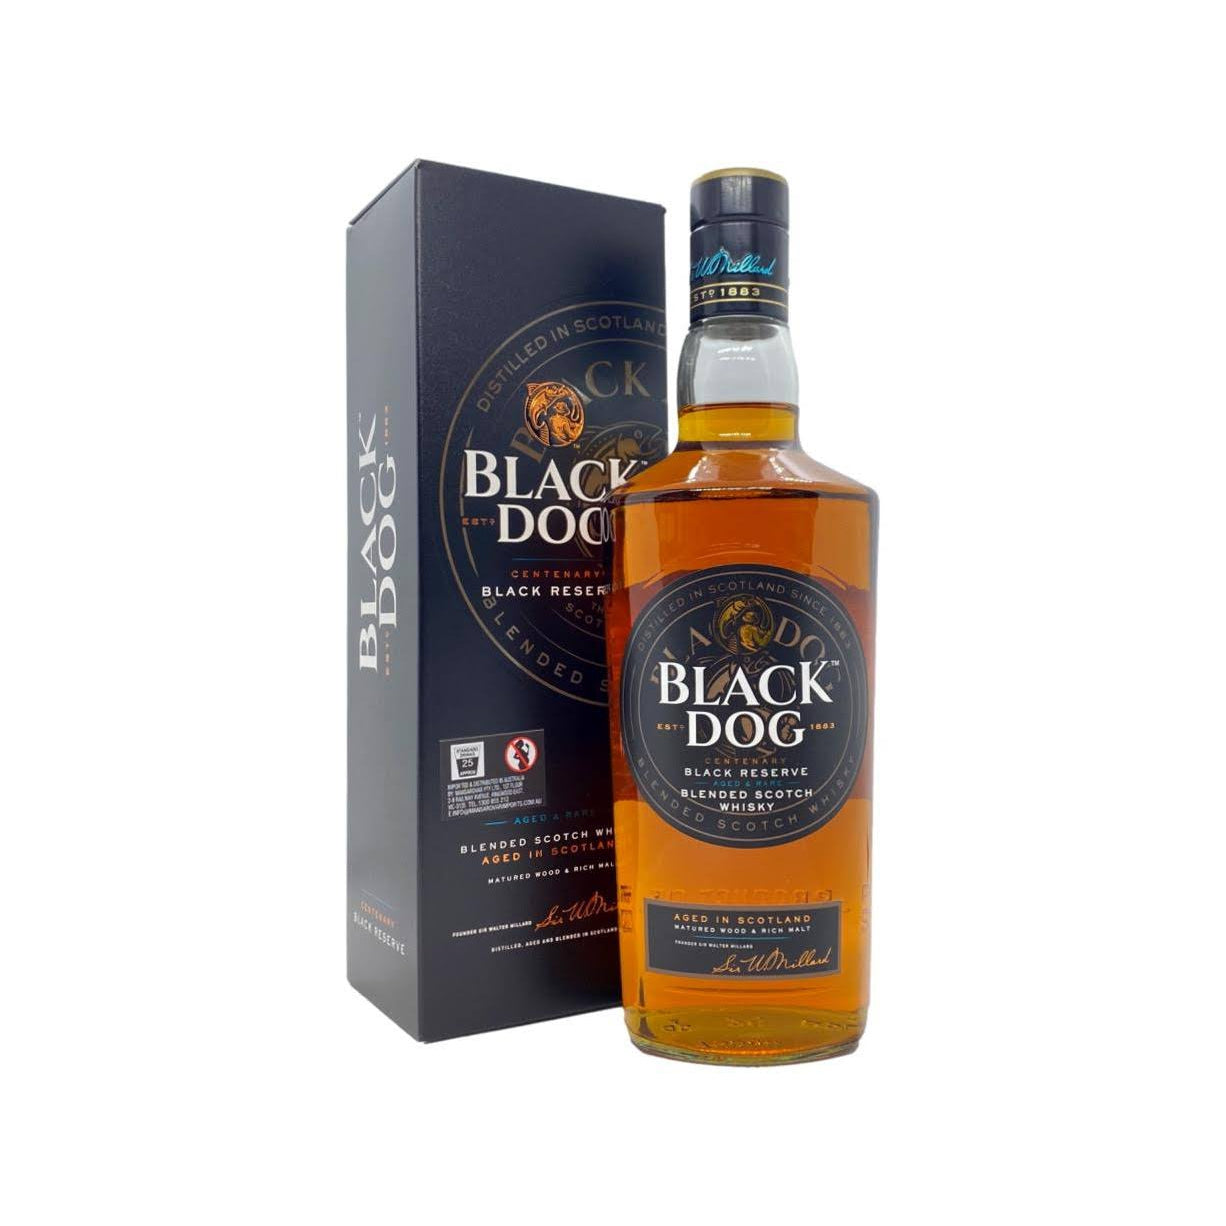 Black Dog Black Reserve Blended Scotch Whisky 750ml